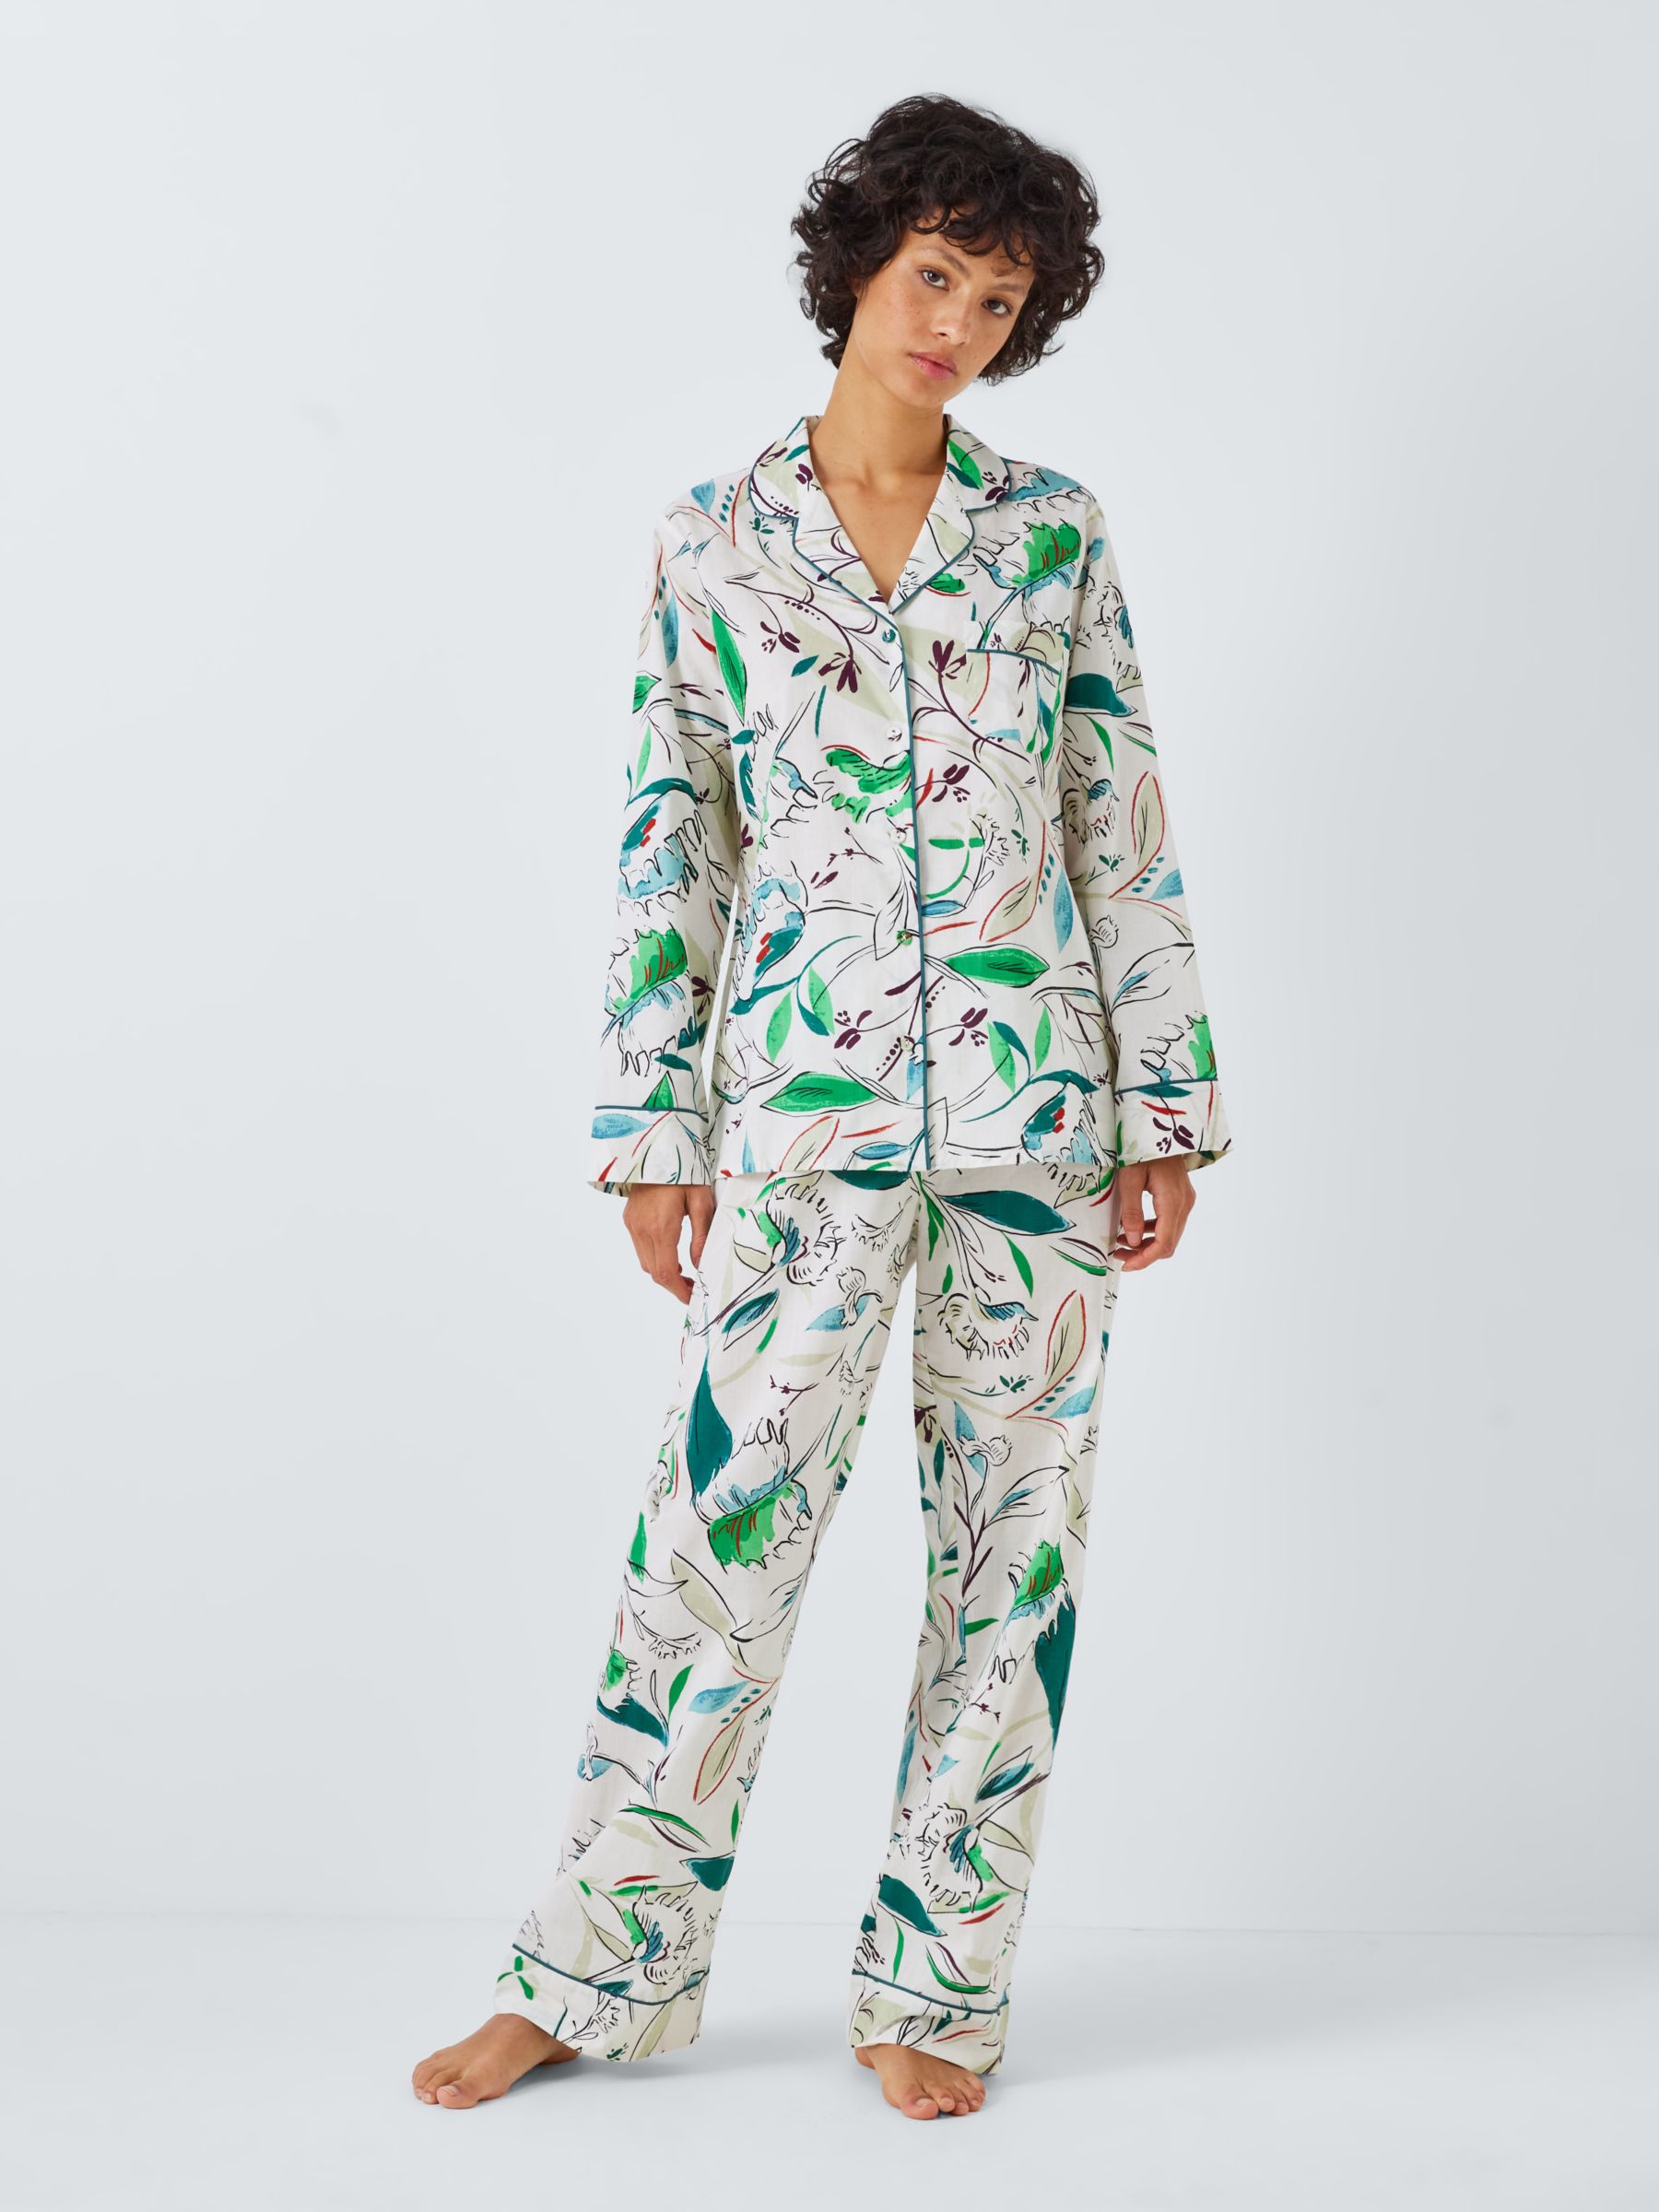 John Lewis Christmas Advert 2023 Snapper Woven Women's Pyjamas